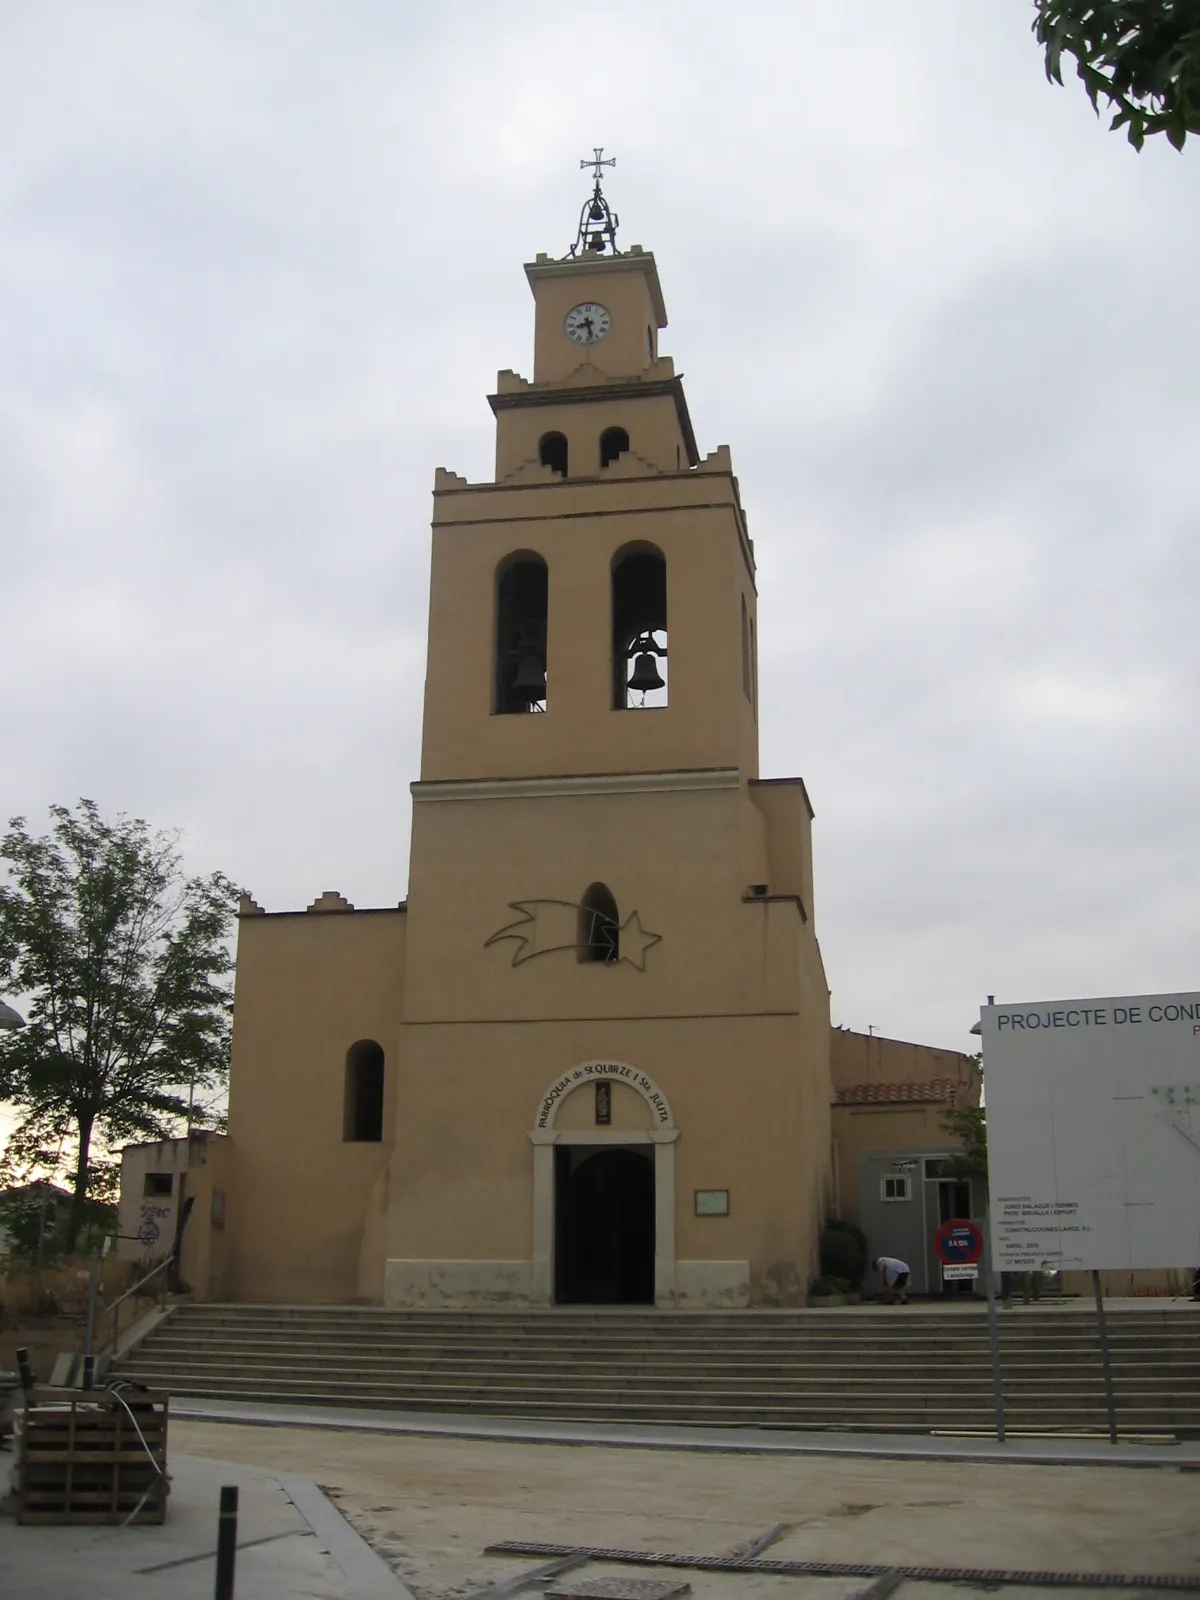 Image of Sant Quirze del Vallès